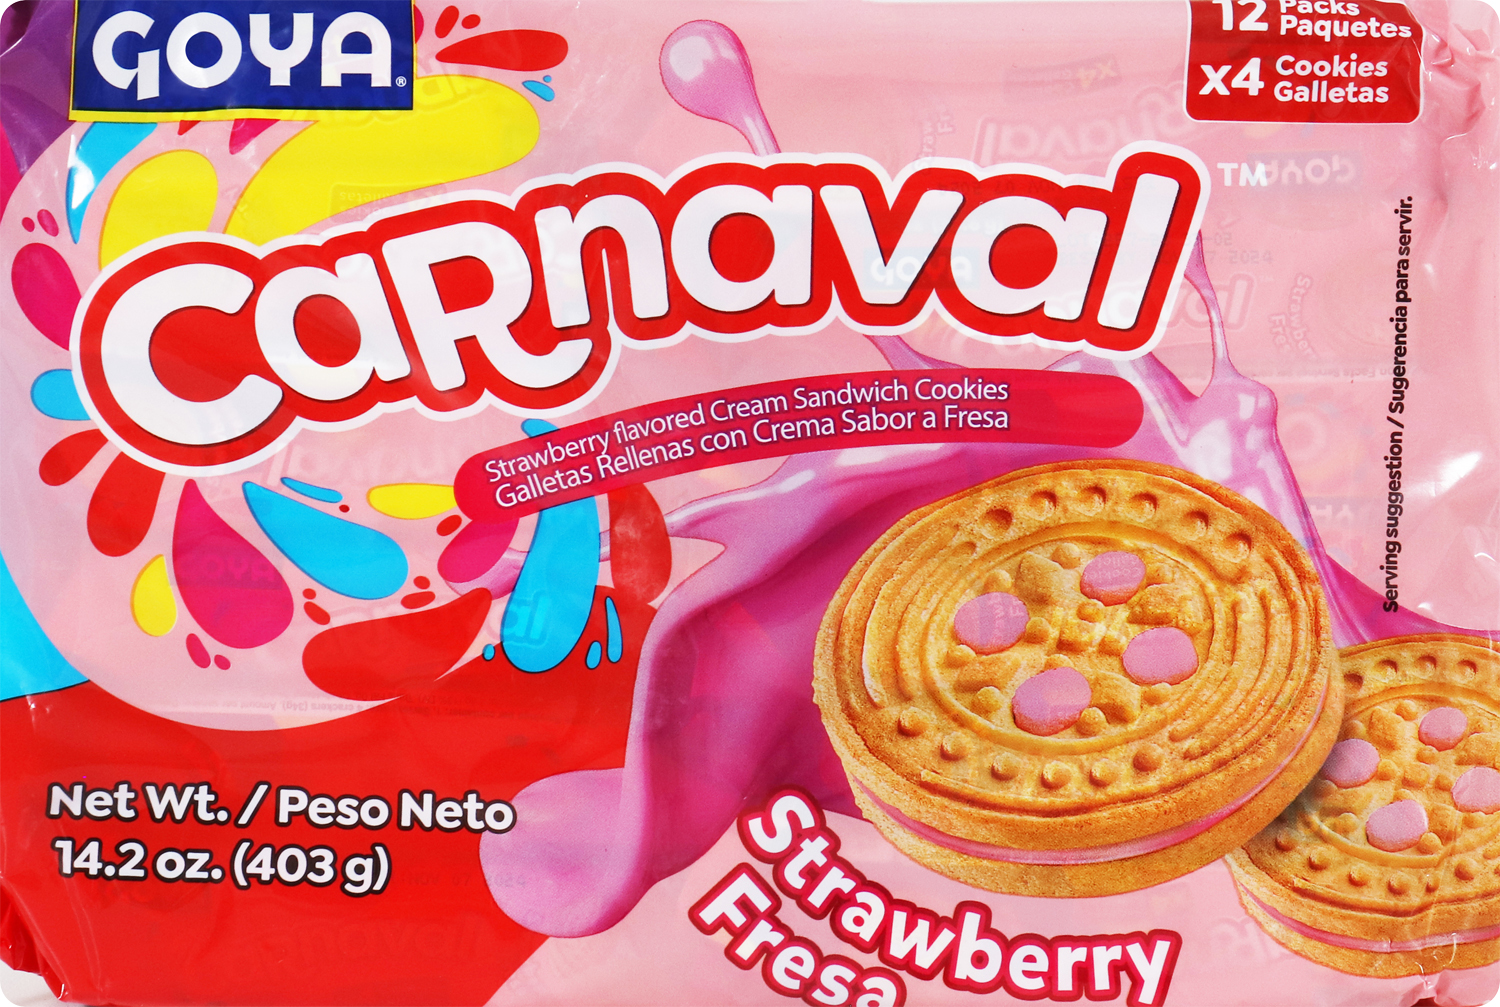 Goya carnaval strawberry cookies 14.2oz